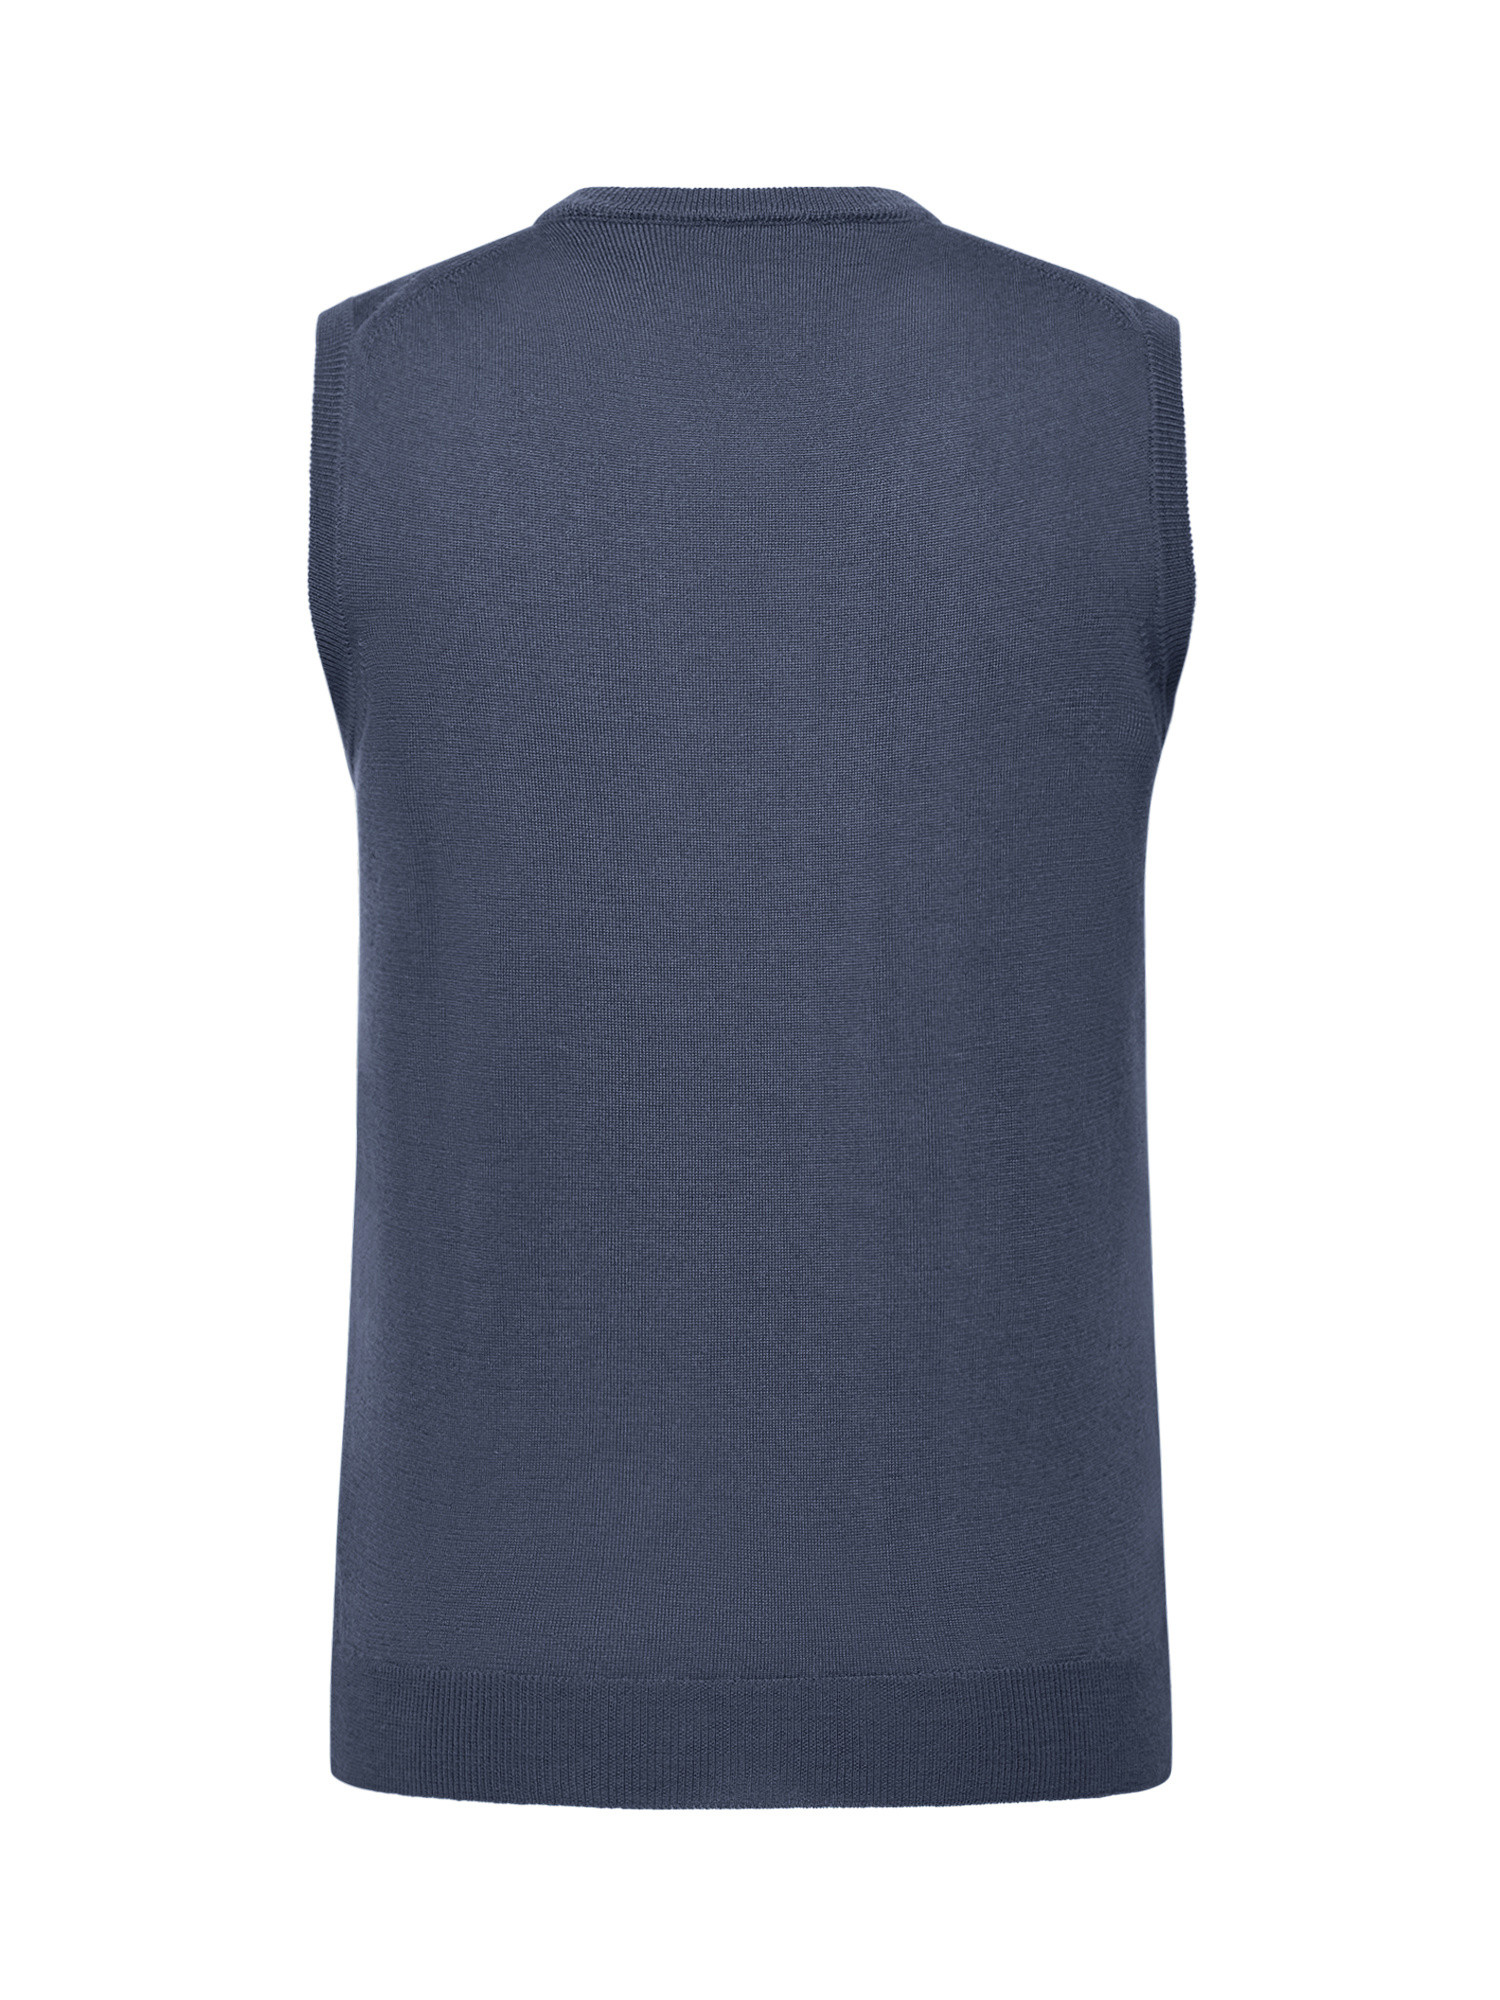 Luca D'Altieri - Merino Blend Vest - Machine Washable, Dark Blue, large image number 1